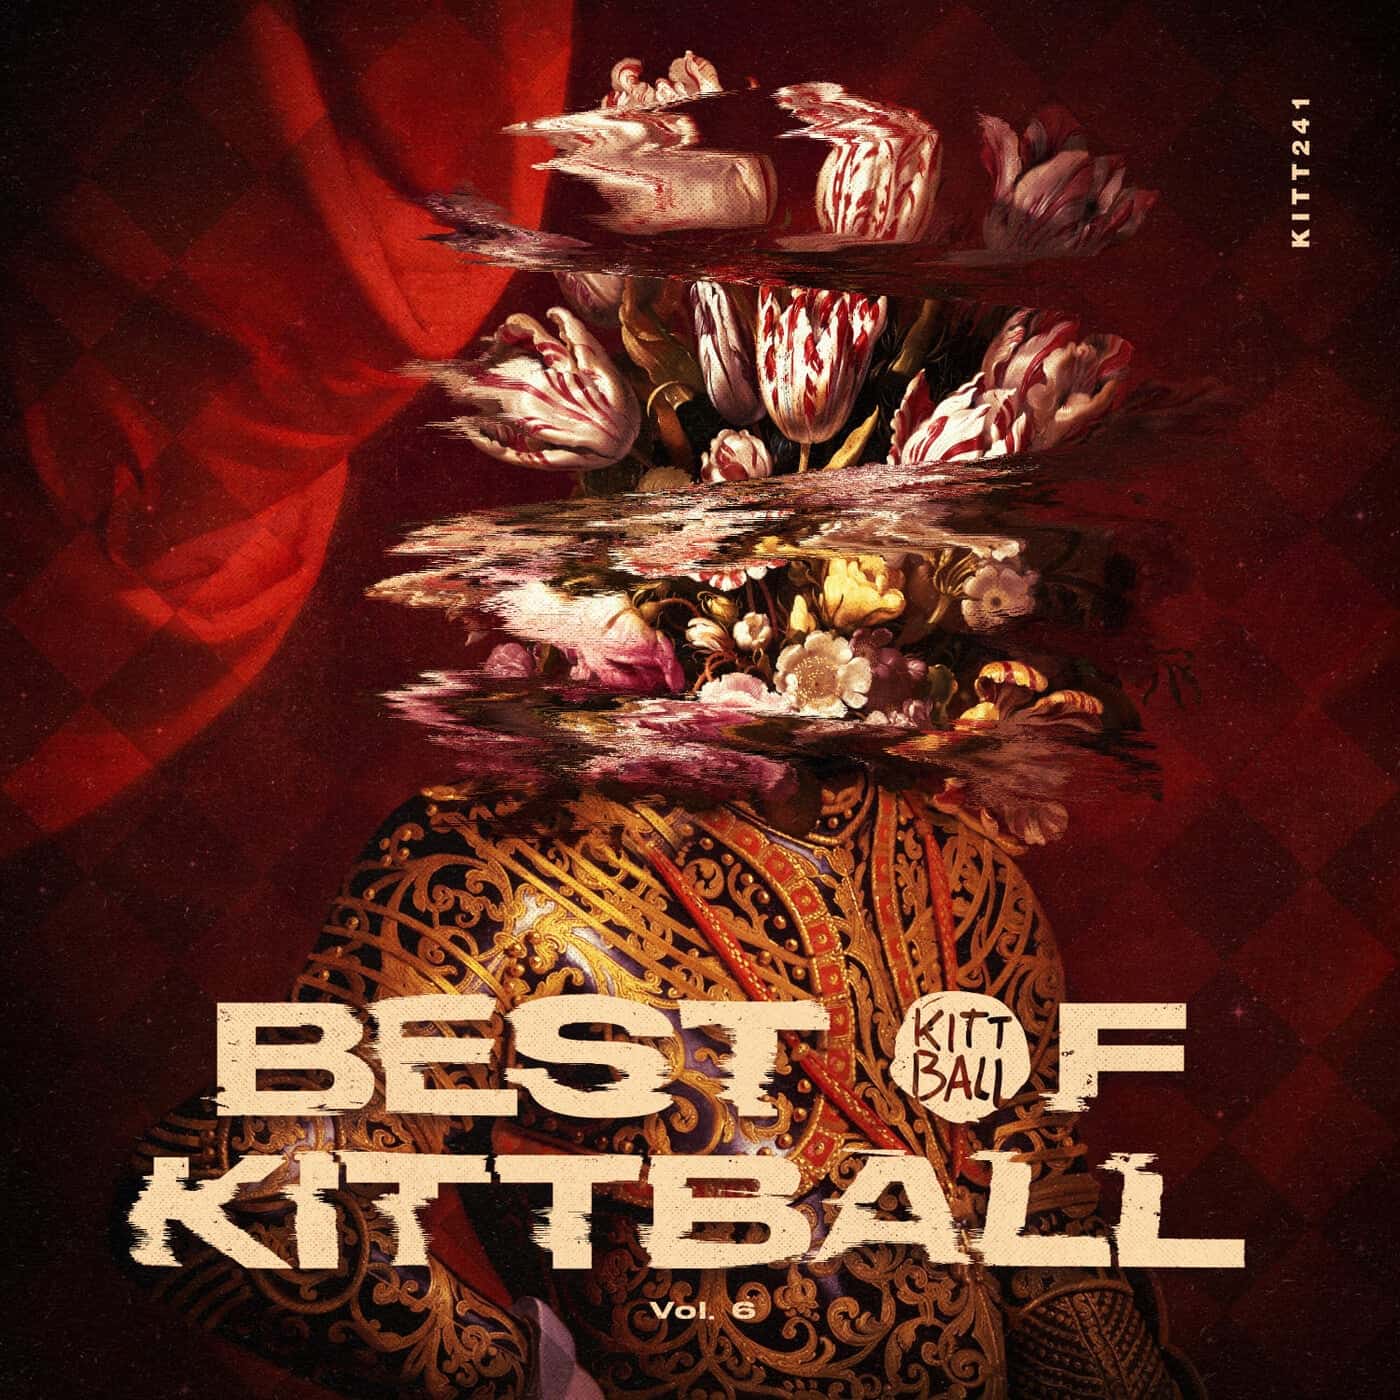 Download VA - Best Of Kittball, Vol. 6 on Electrobuzz